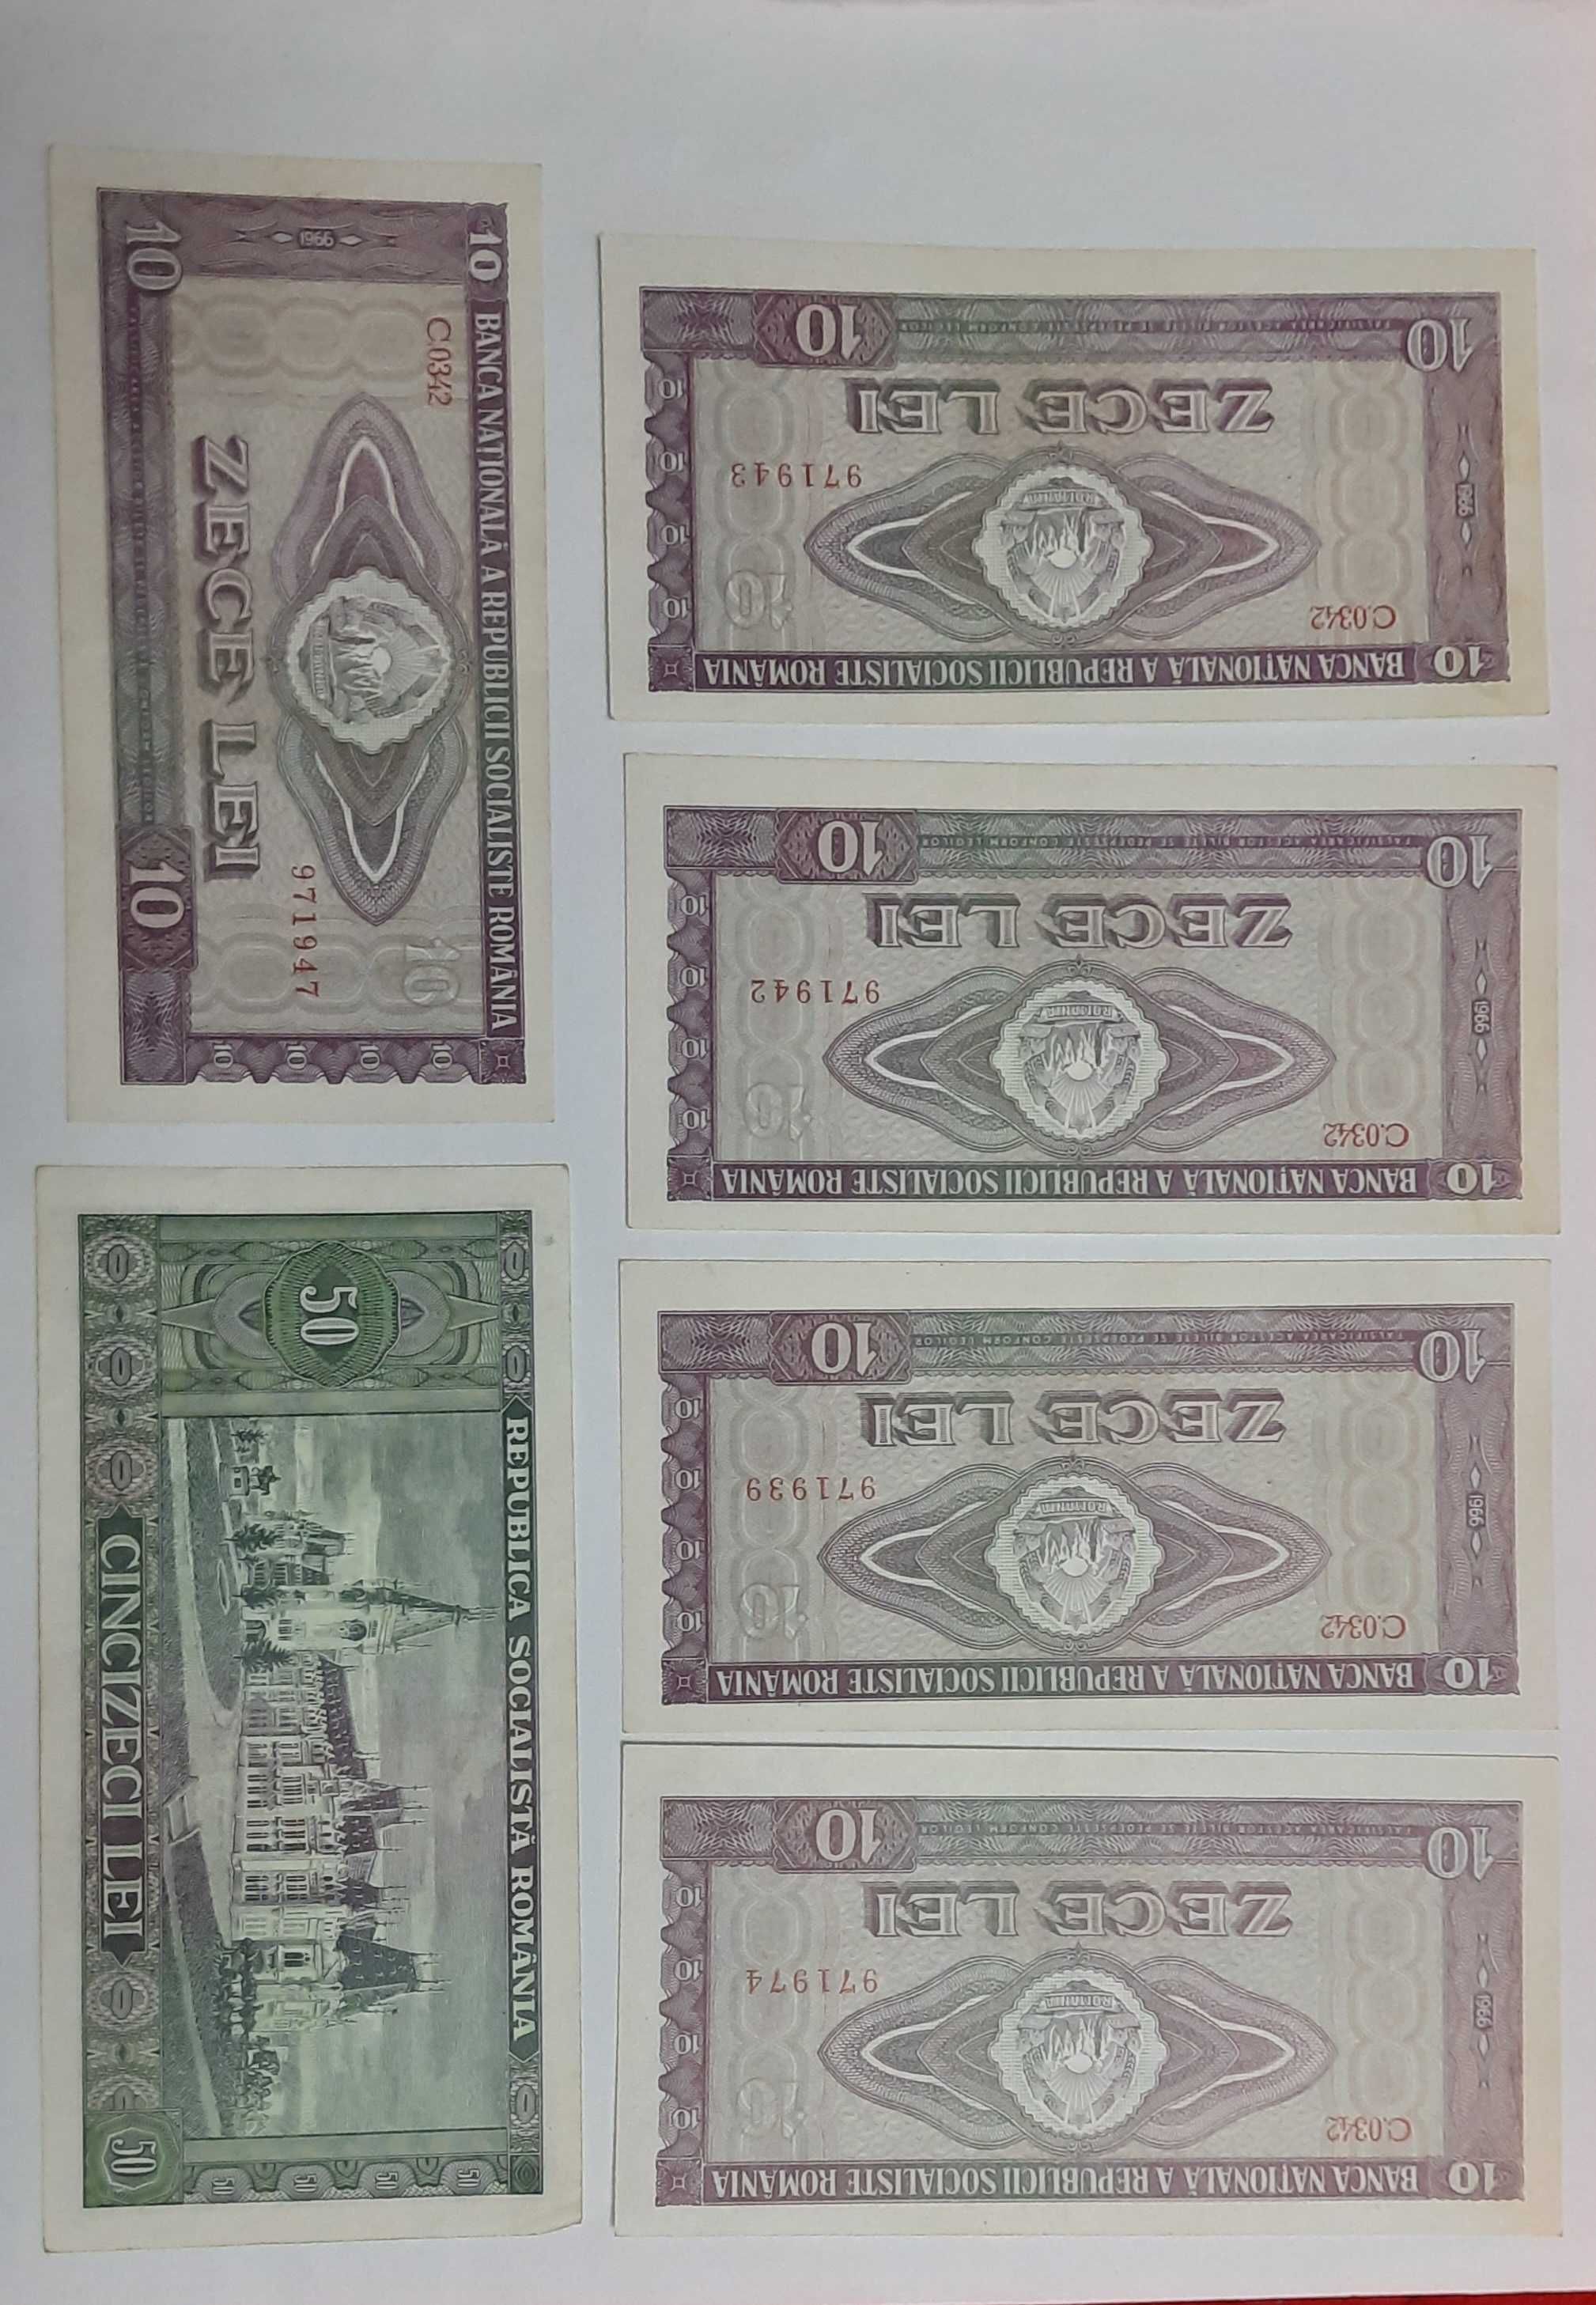 Bancnote anul 1966